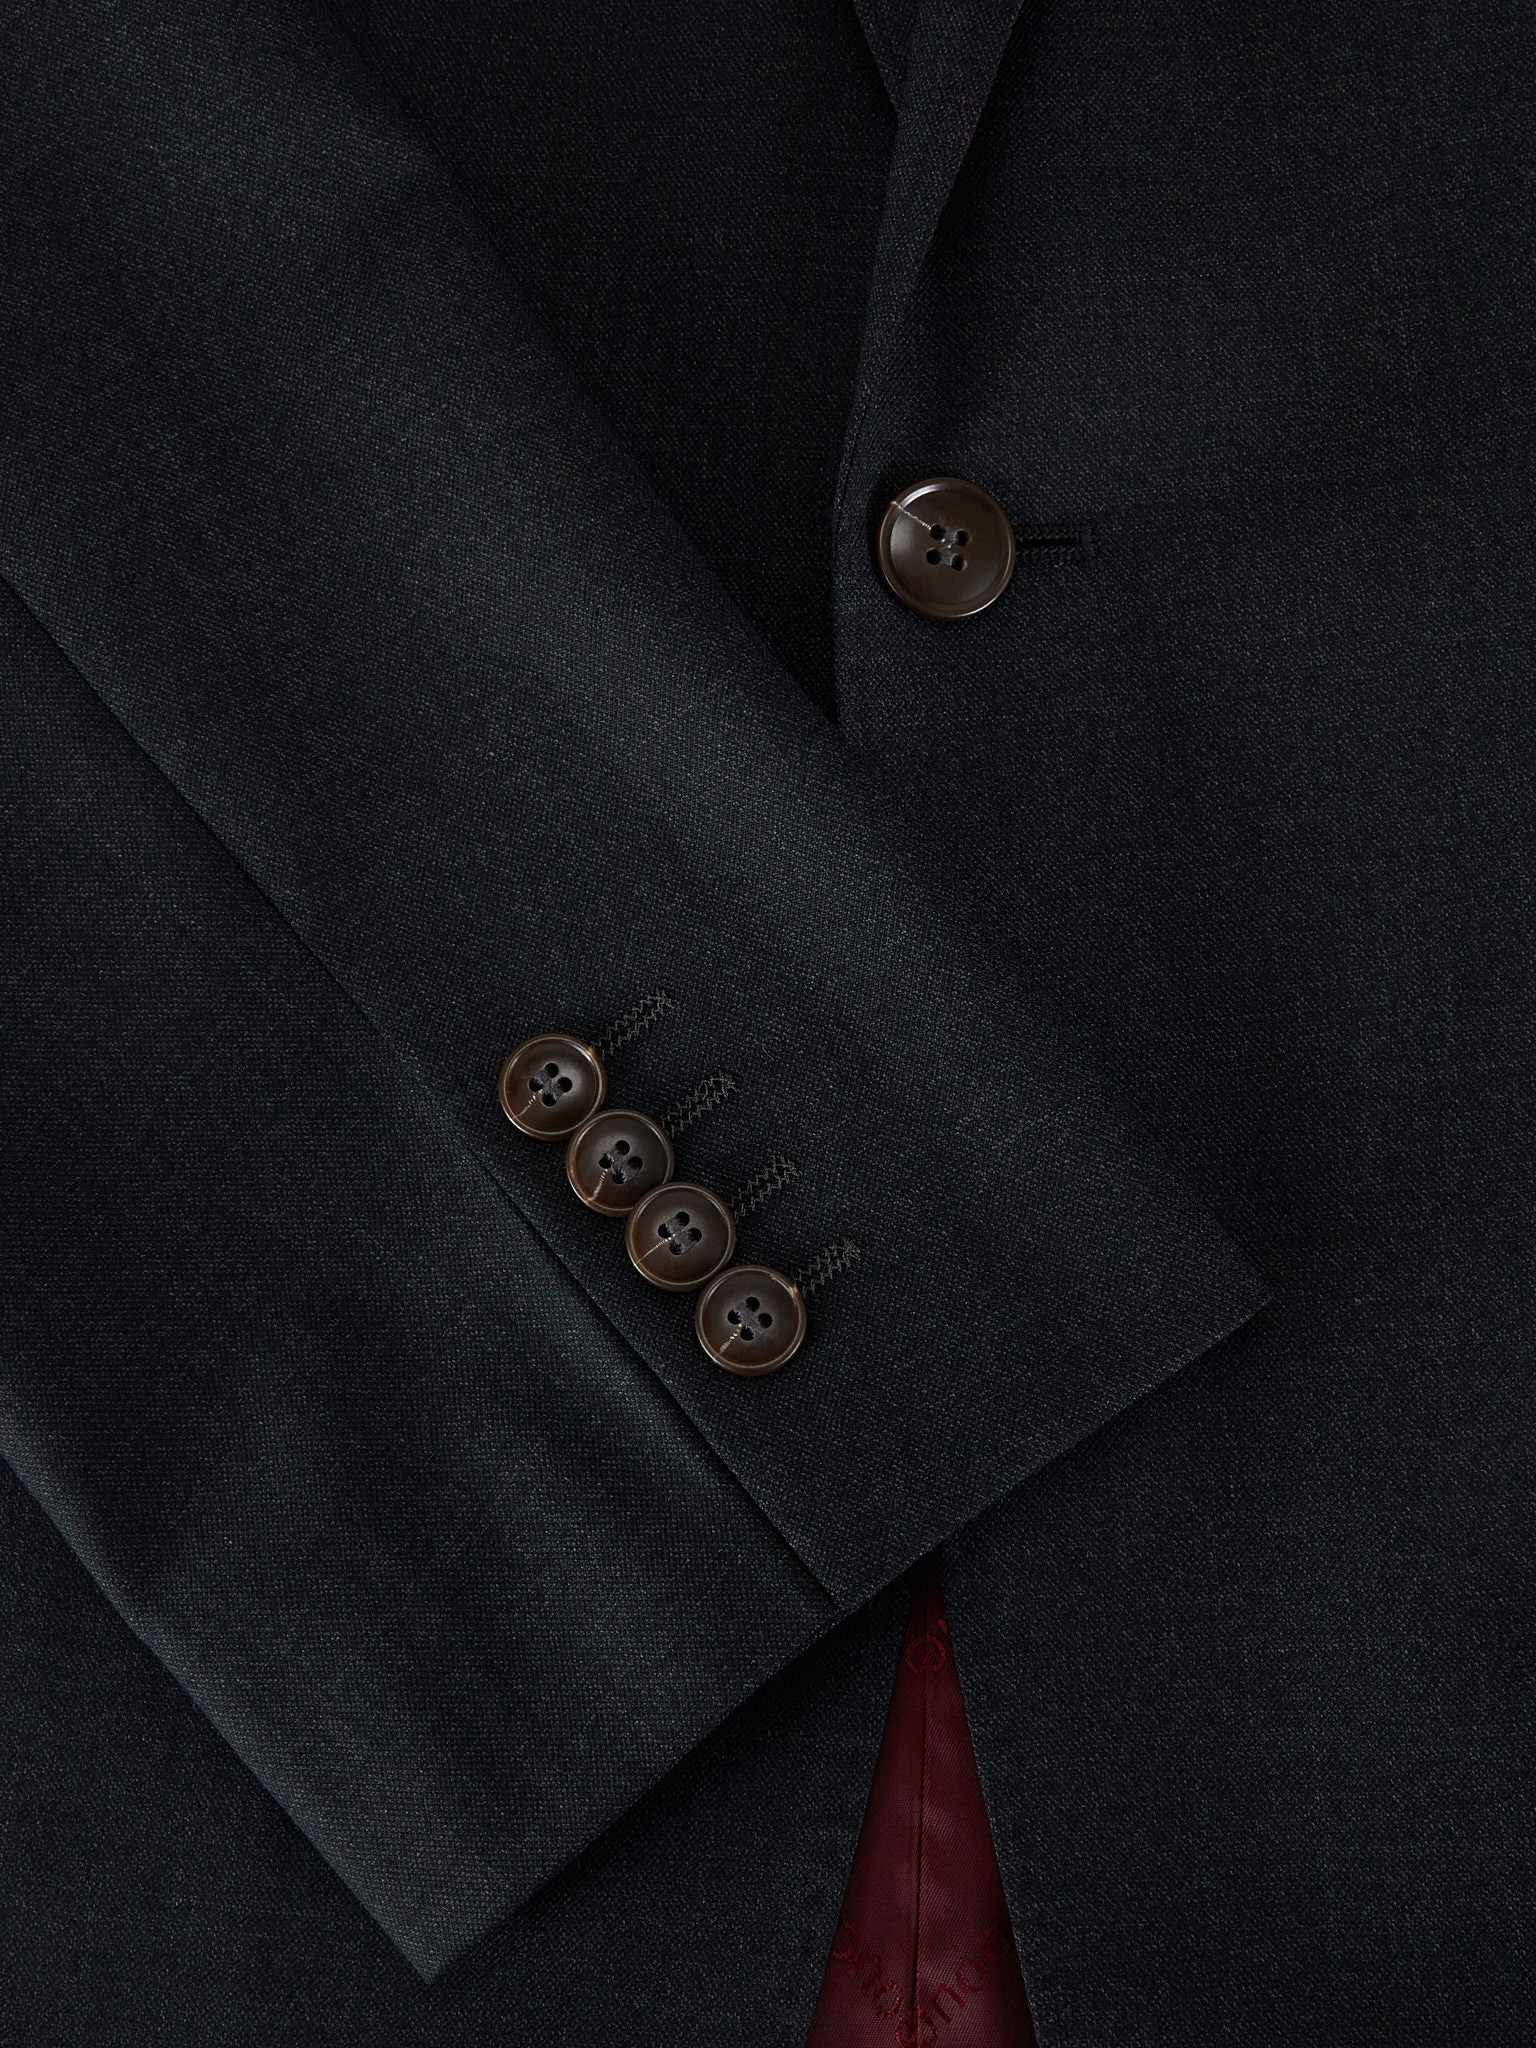 Douglas Valdino Charcoal Mix & Match Suit Jacket Regular Length